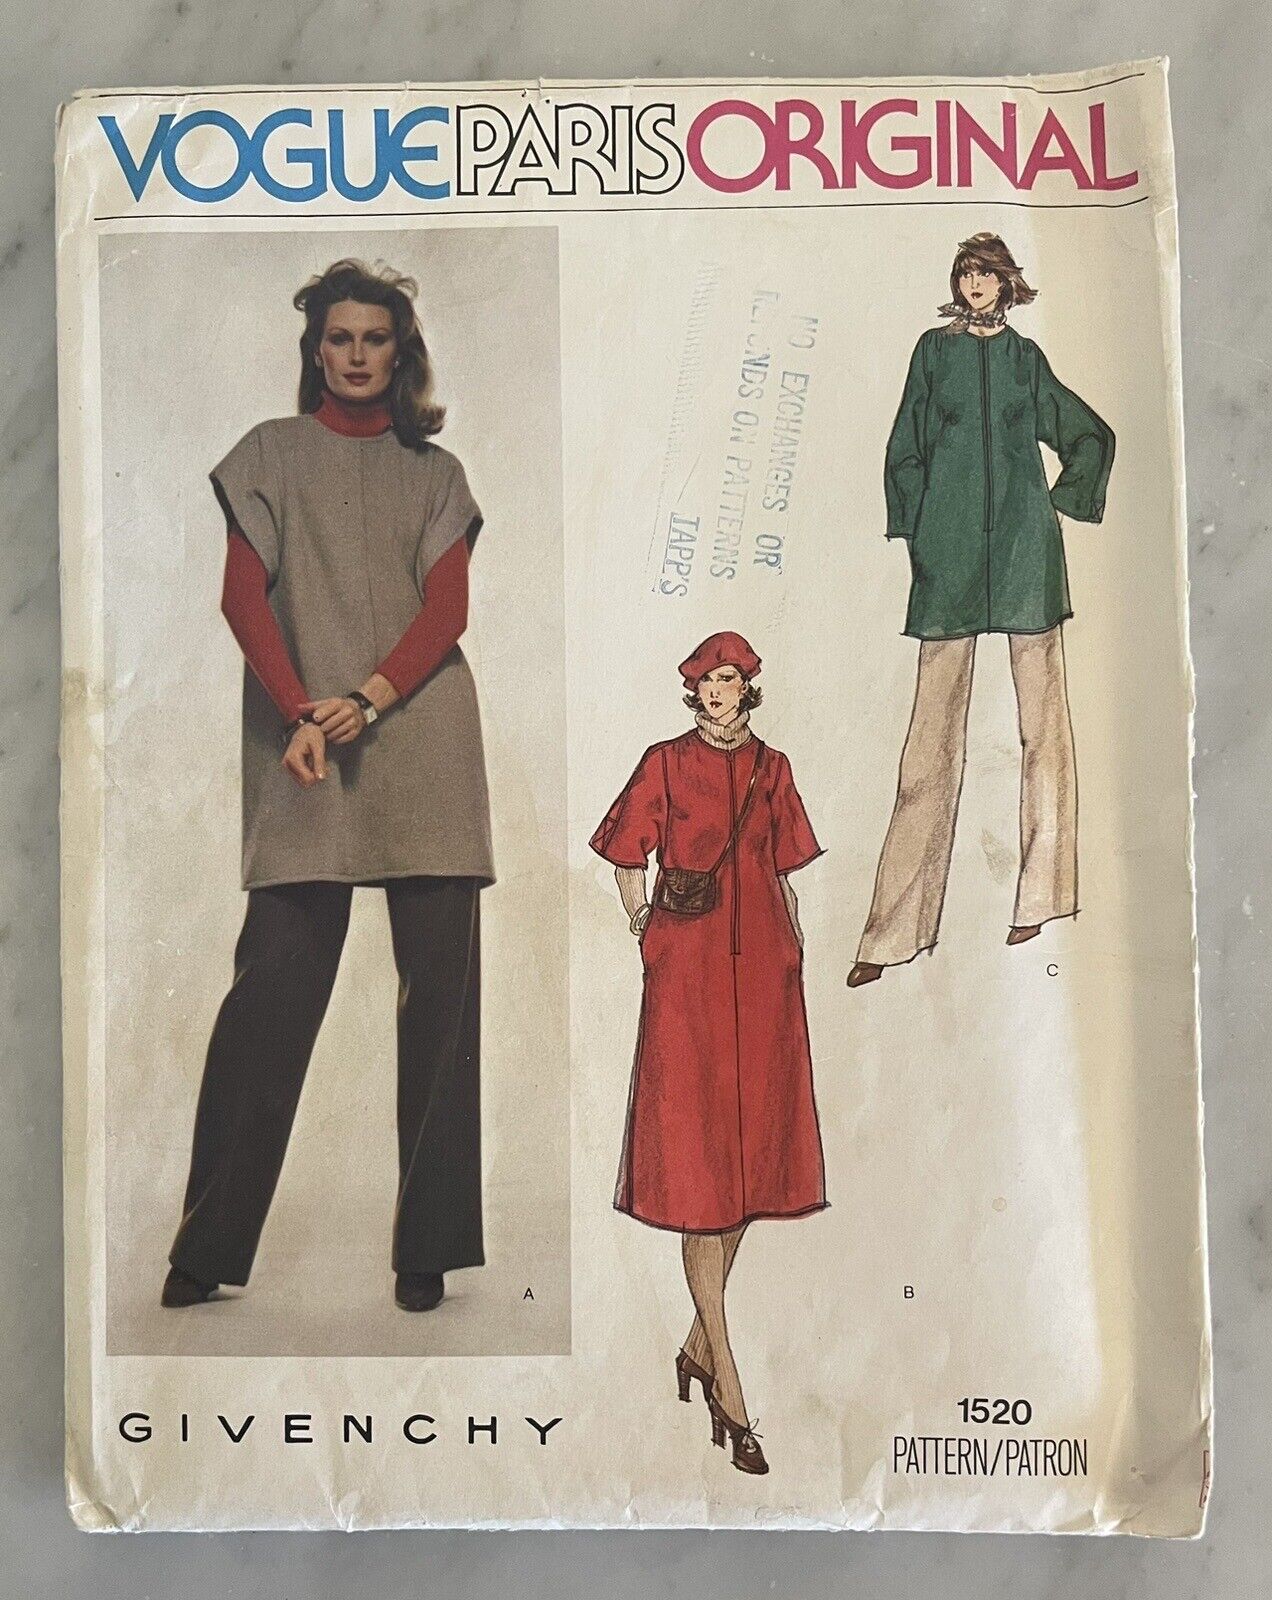 RARE Vintage ORIGINAL Vogue Paris Original GIVENCHY Pattern 1520